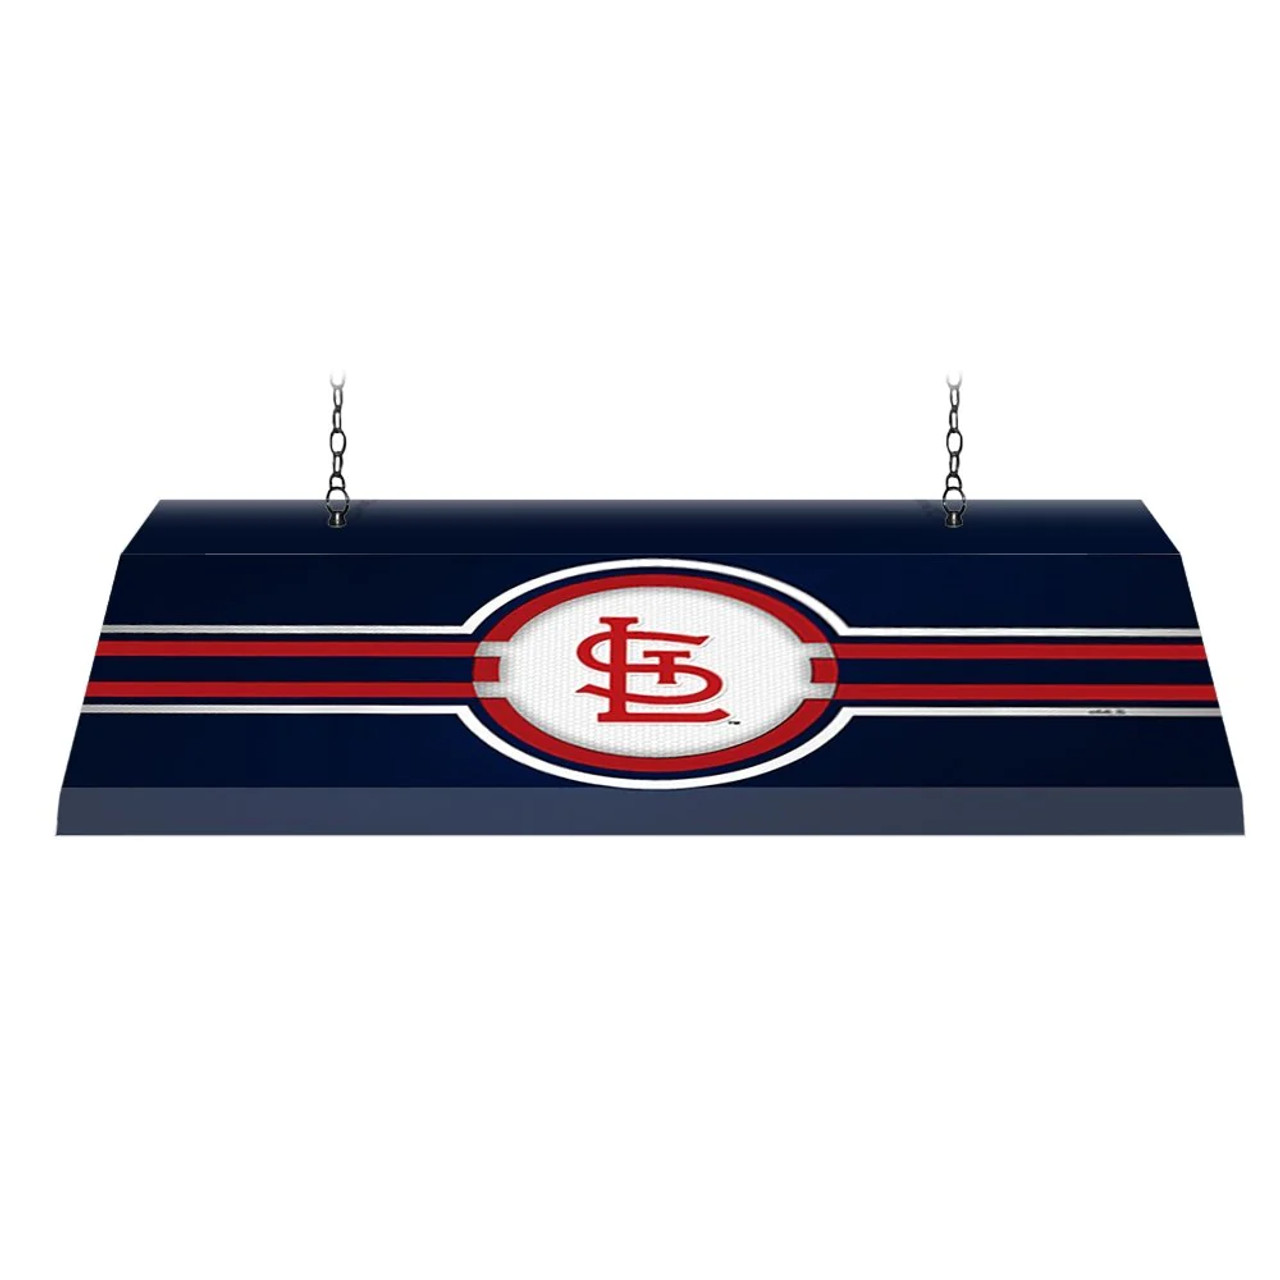 St. Louis Cardinals: Edge Glow Pool Table Light "B" Version